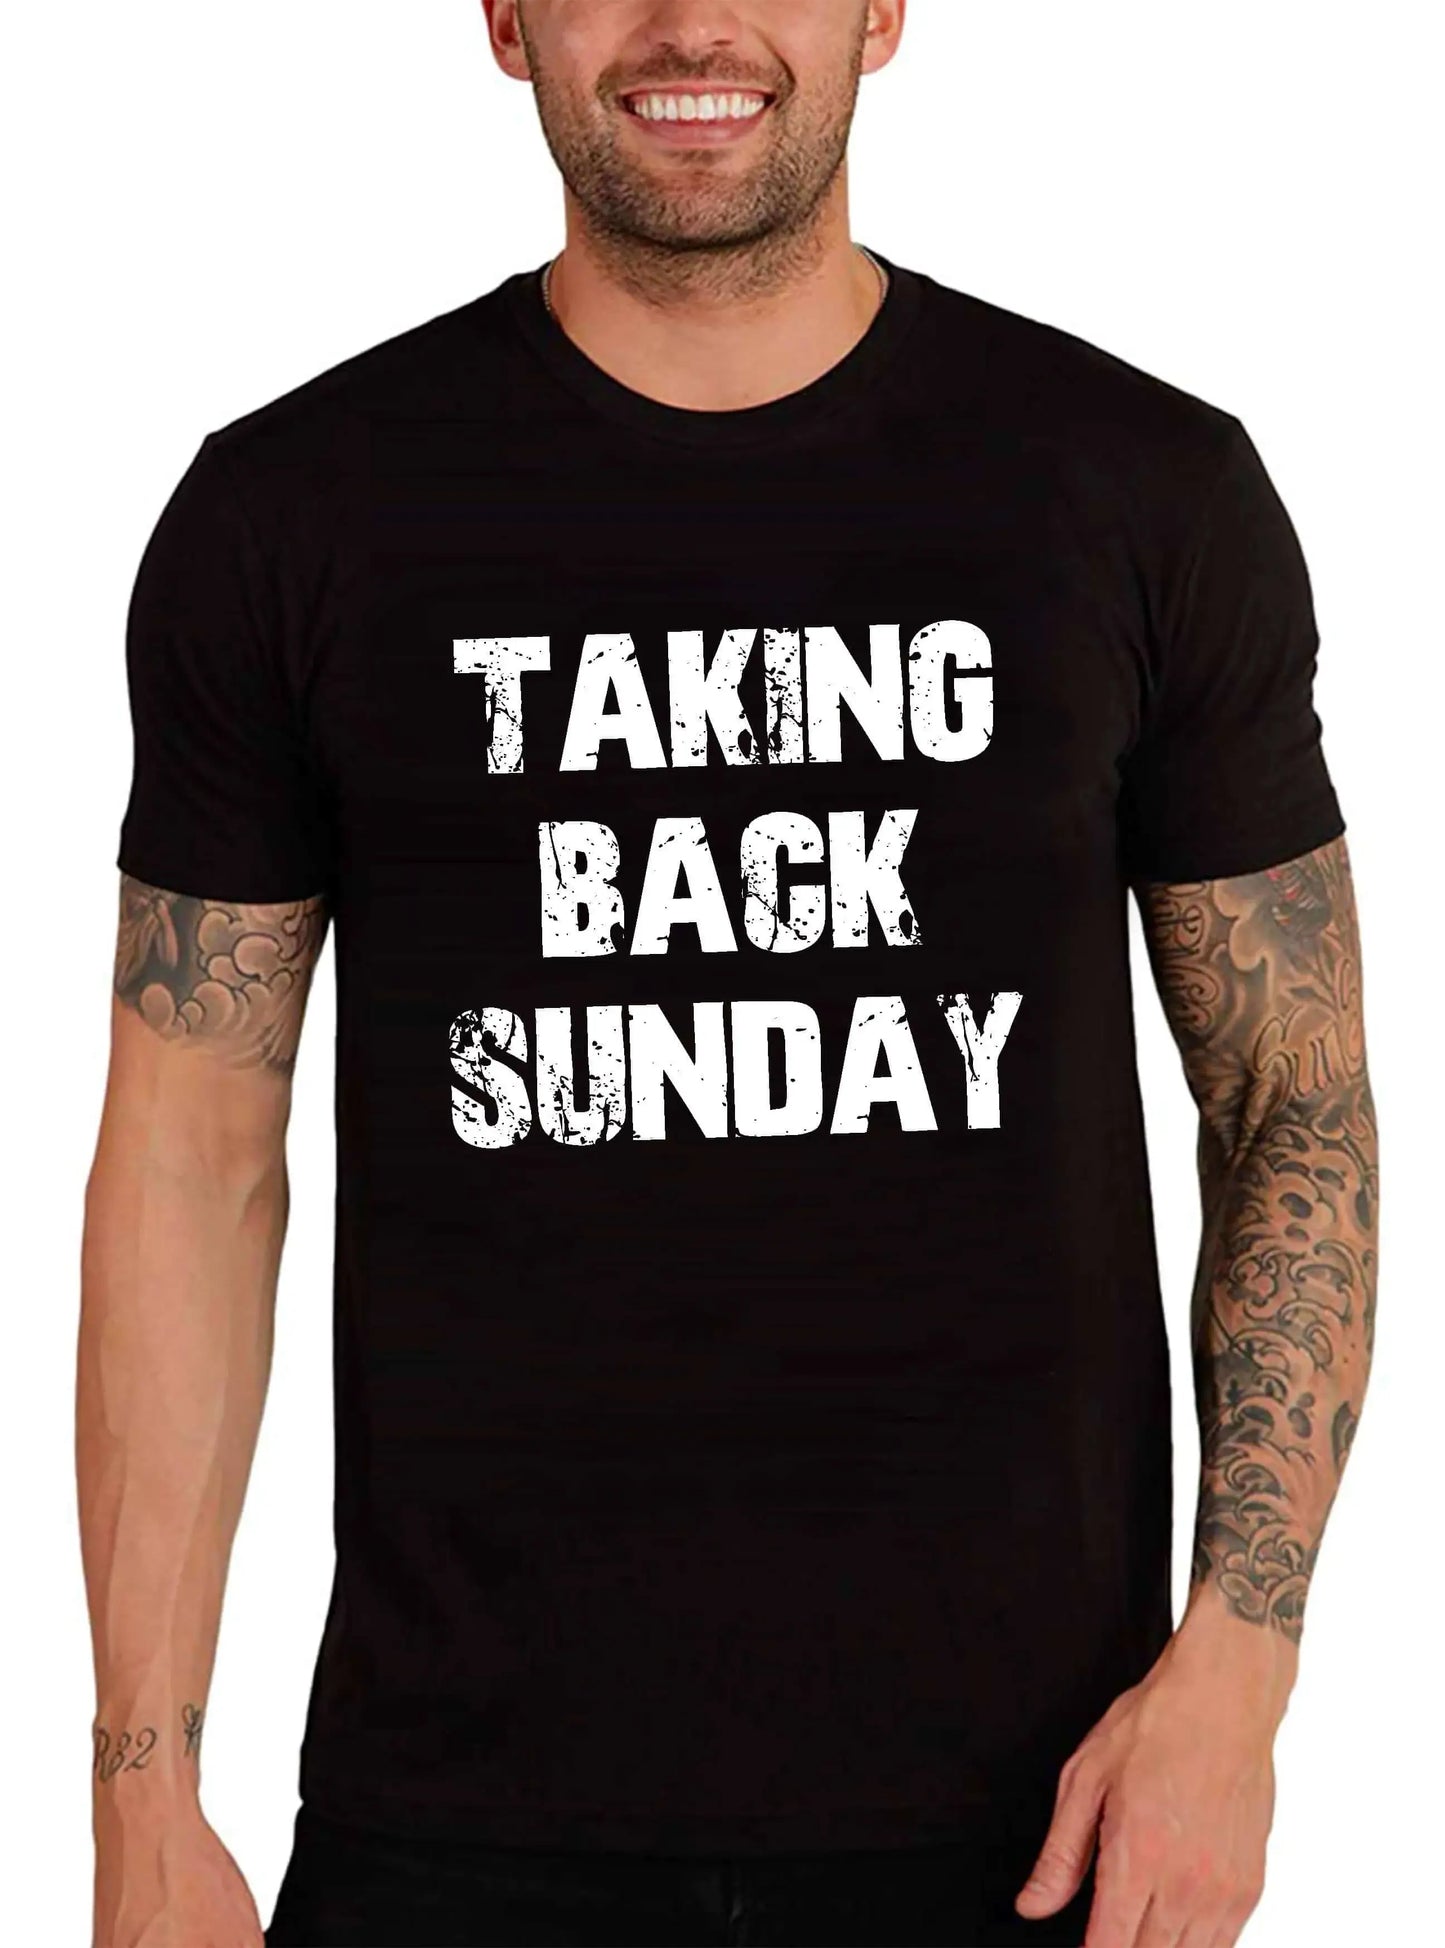 Men's Graphic T-Shirt Taking Back Sunday Eco-Friendly Limited Edition Short Sleeve Tee-Shirt Vintage Birthday Gift Novelty